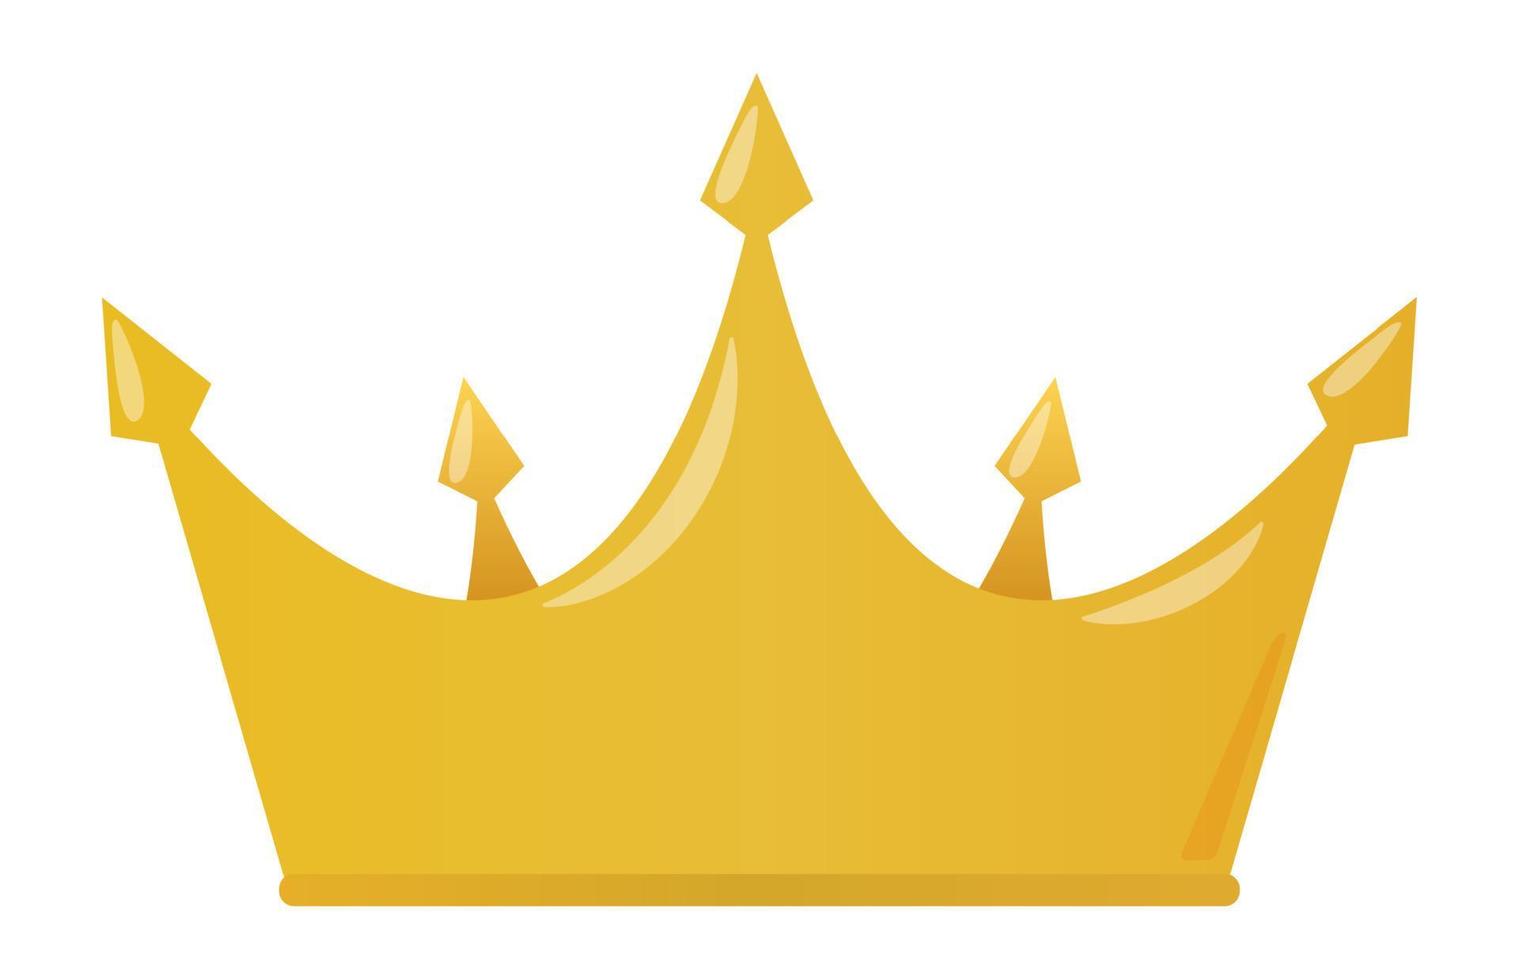 prinsessa gyllene krona ikonen i platt stil isolerad på vit bakgrund vektor illustration